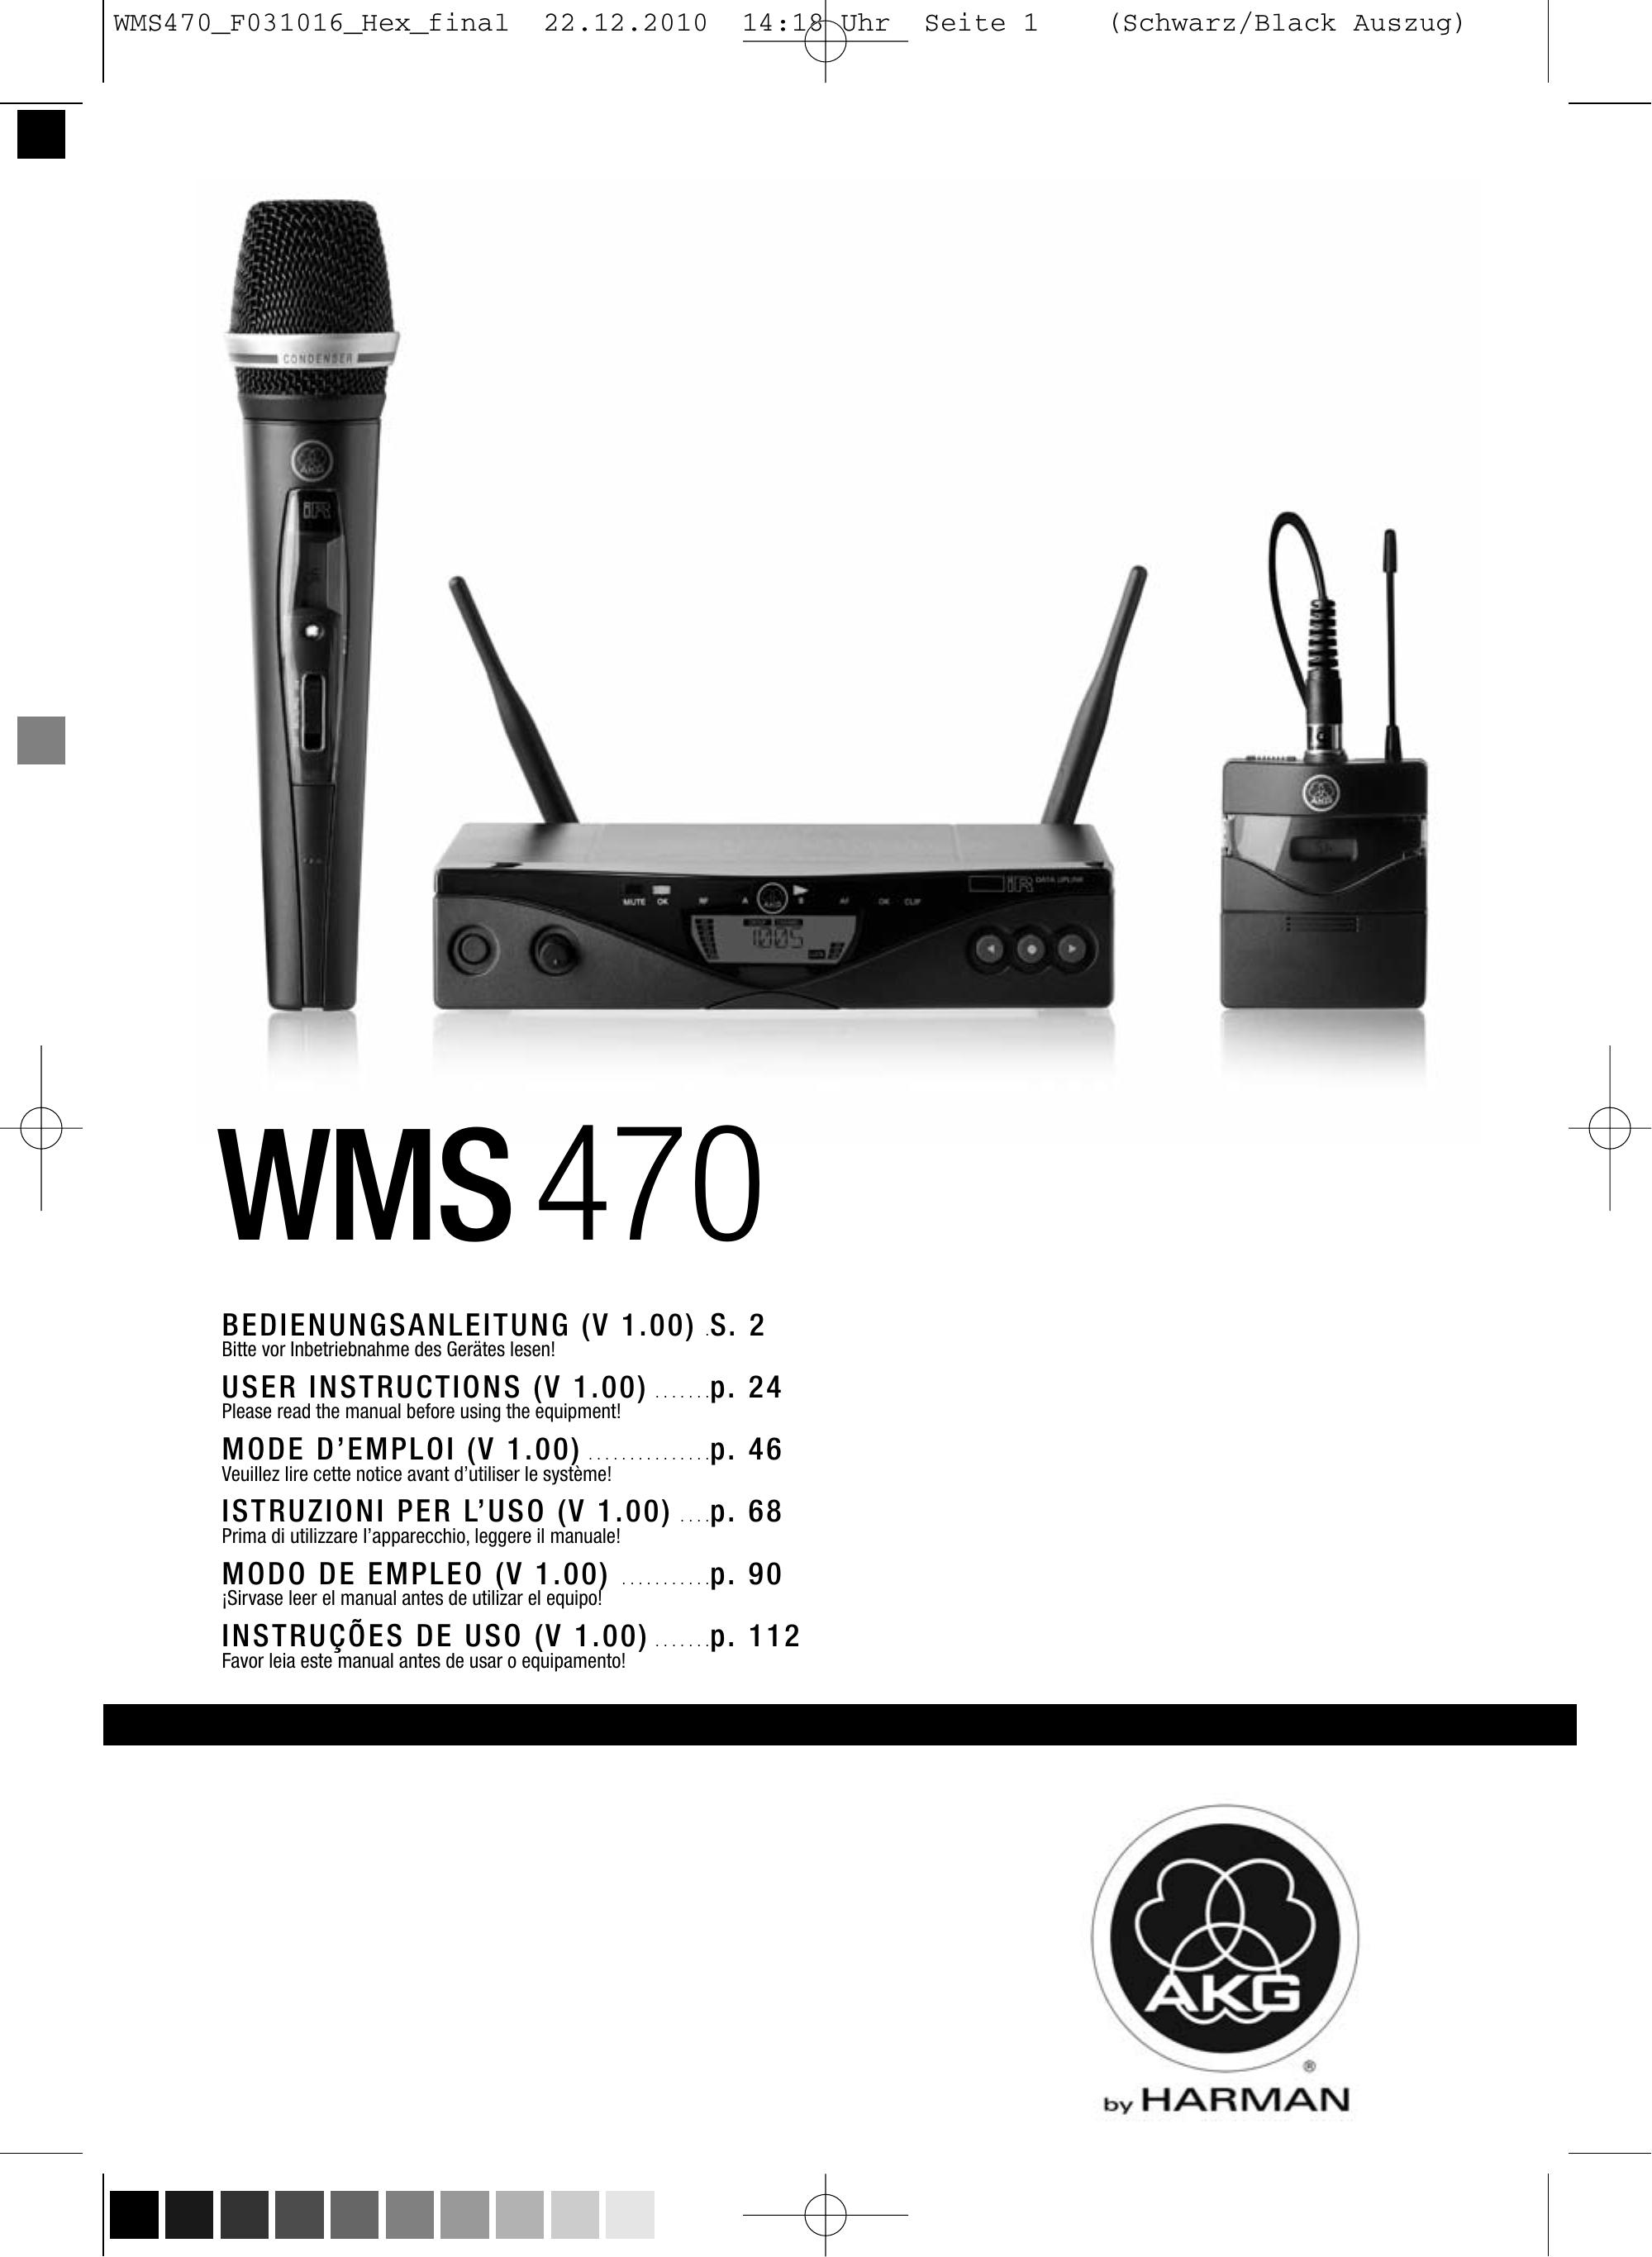 Harman-Kardon WMS 470 Microphone User Manual